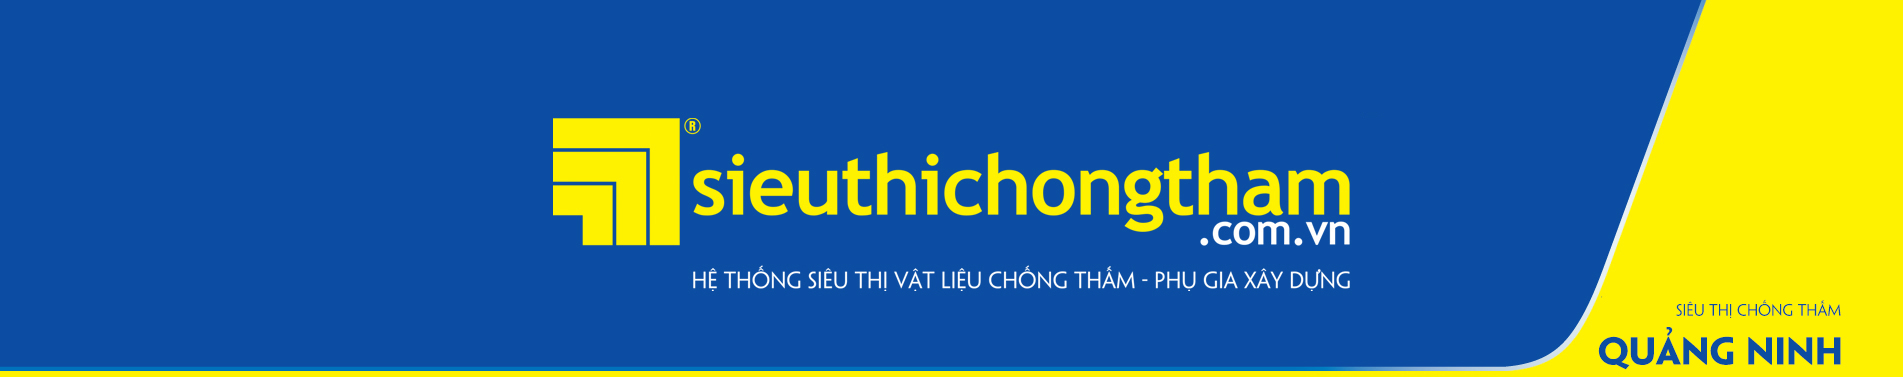 Sieu Thi Chong Tham Quang Ninh